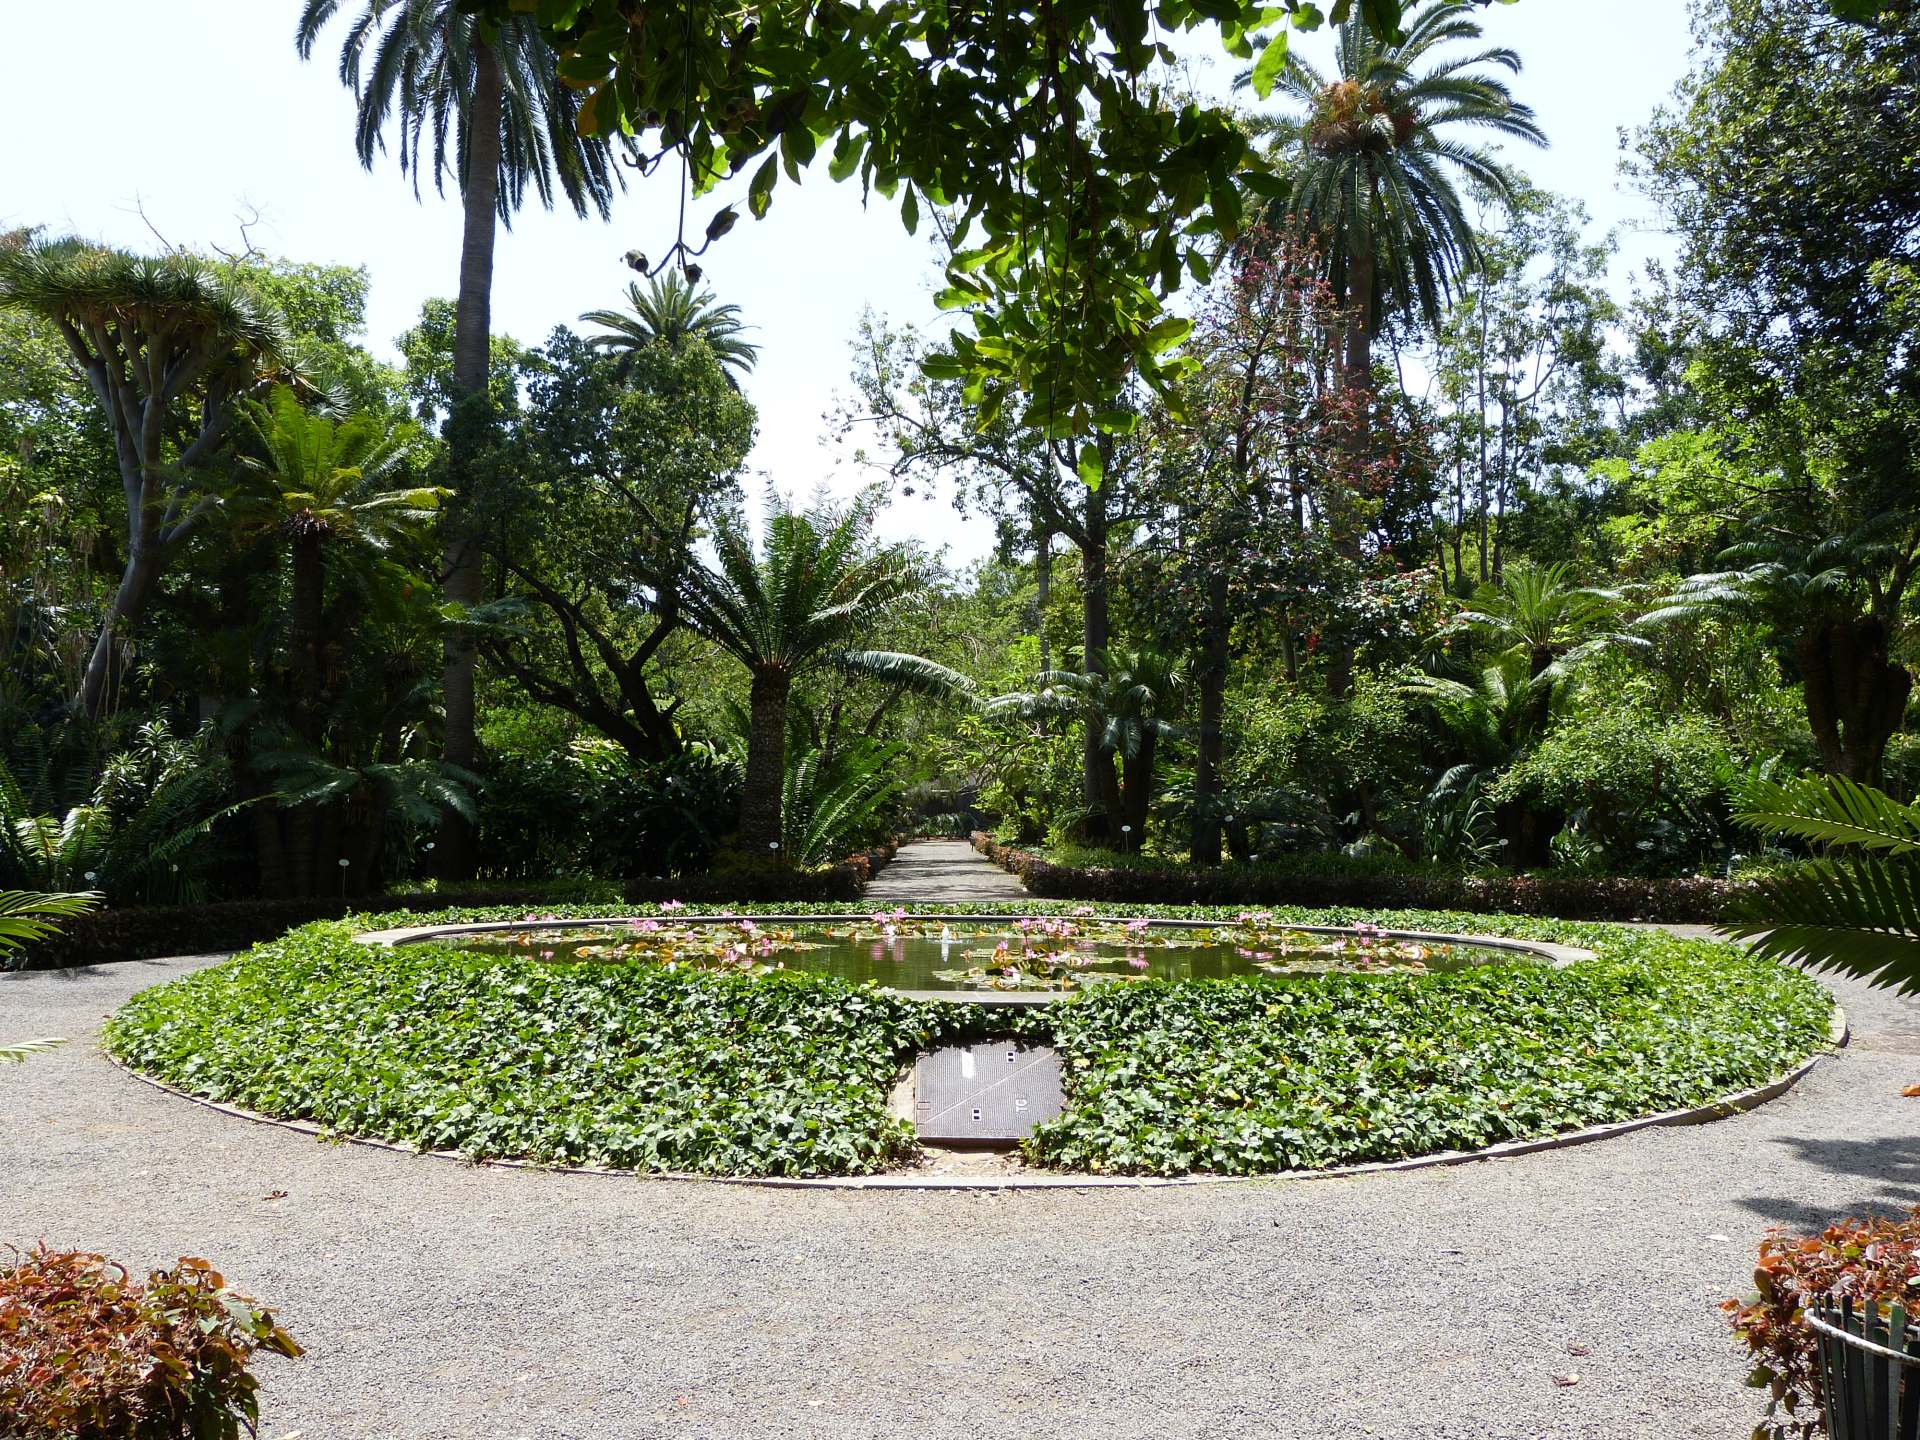 Eindrücke vom Jardin Botanico